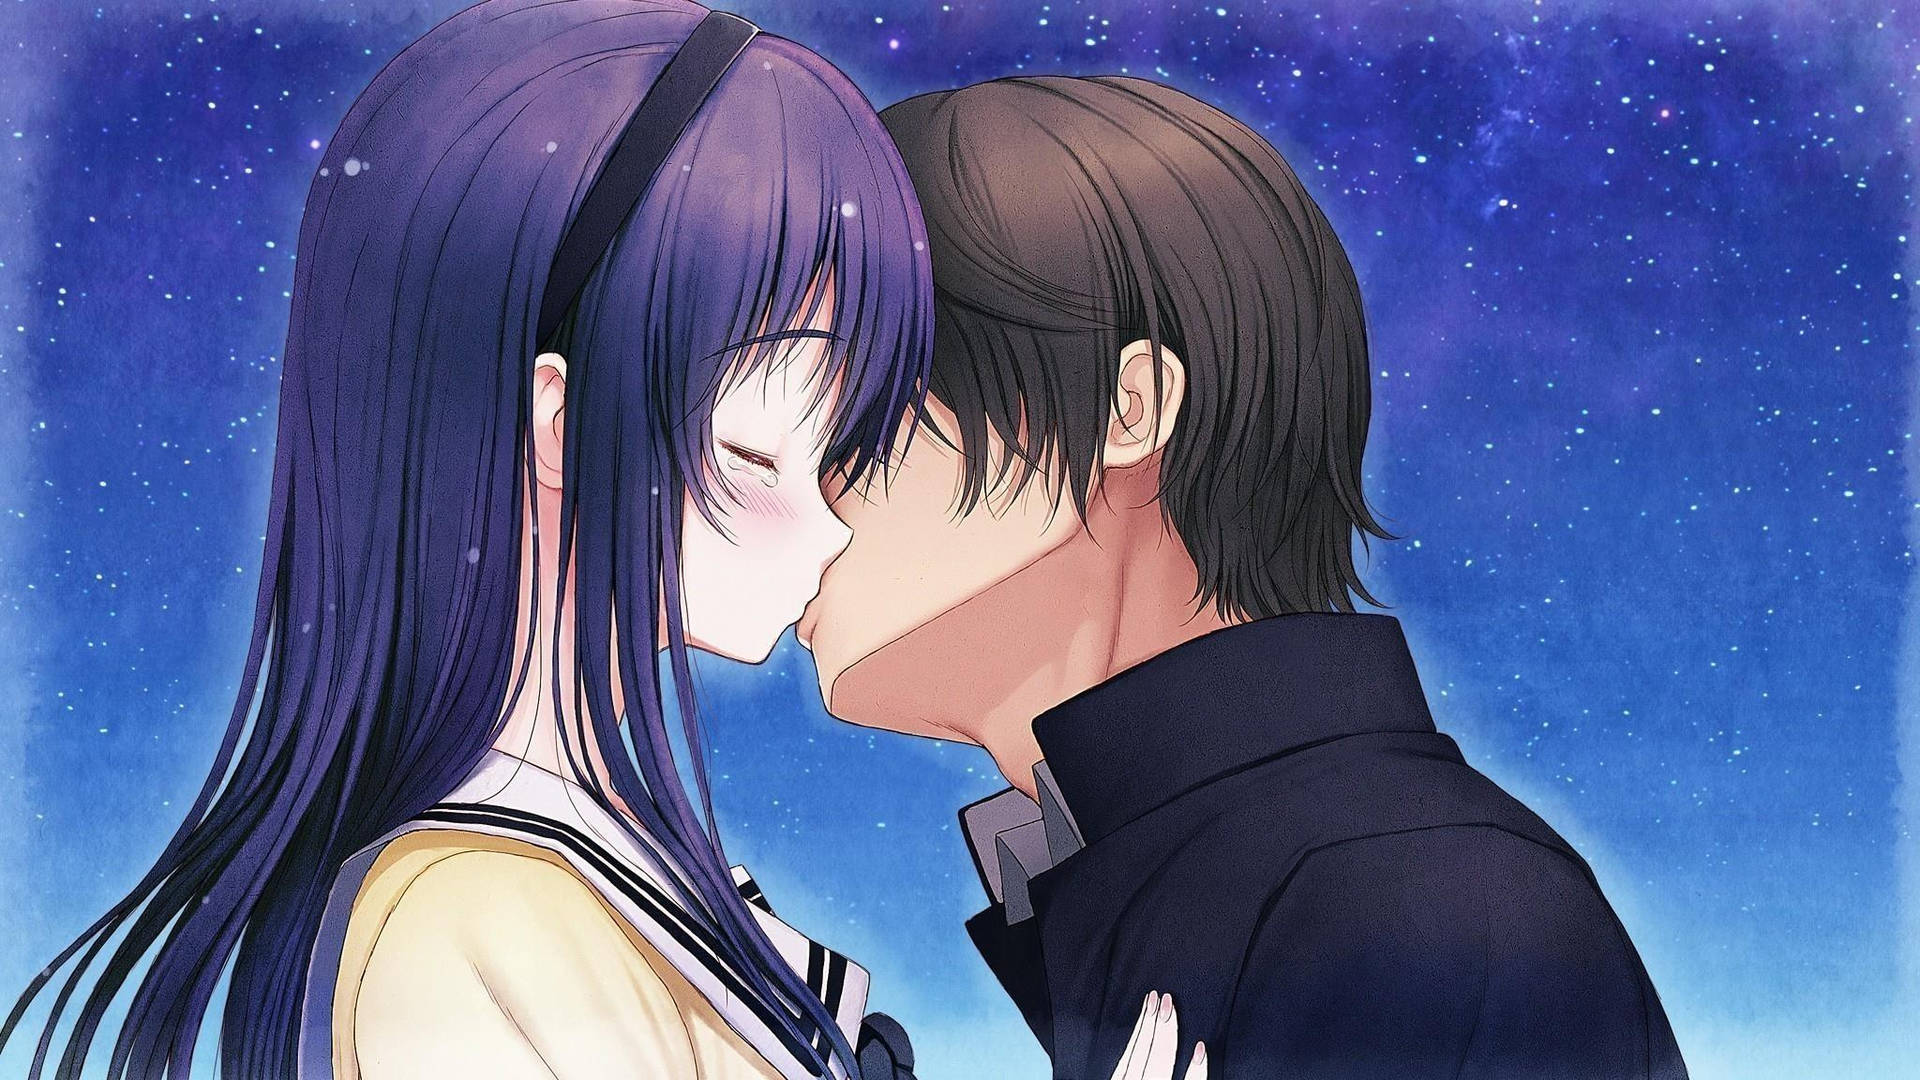 Anime Couple Kiss Under Starry Night Sky Wallpaper